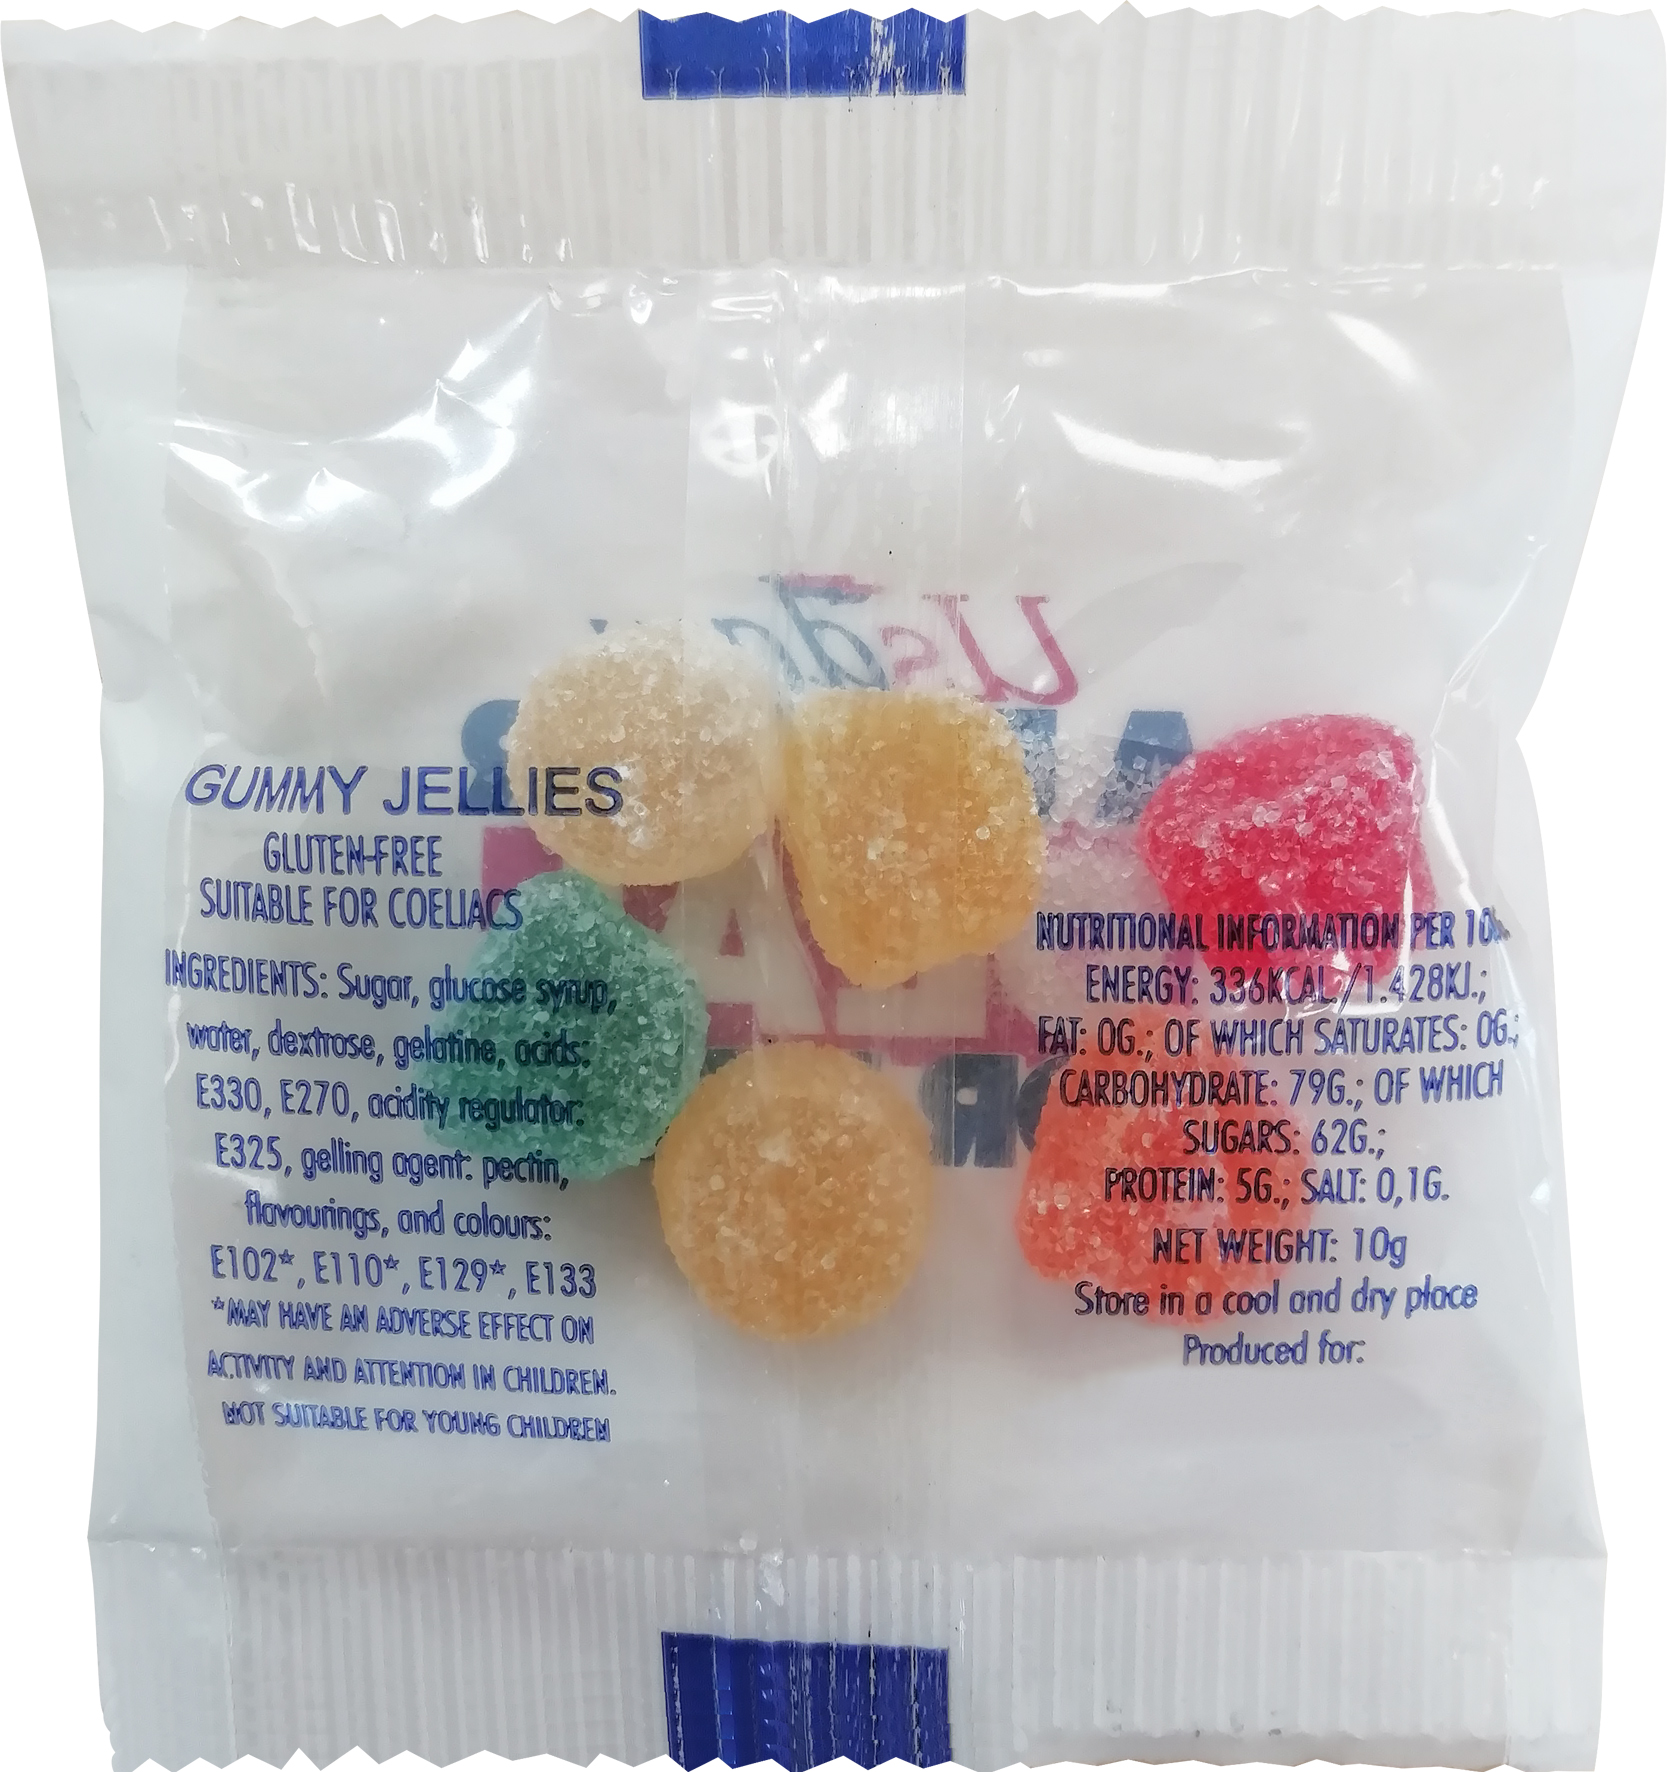 c 0071fp 00 09 - Jelly bean bag (10g)